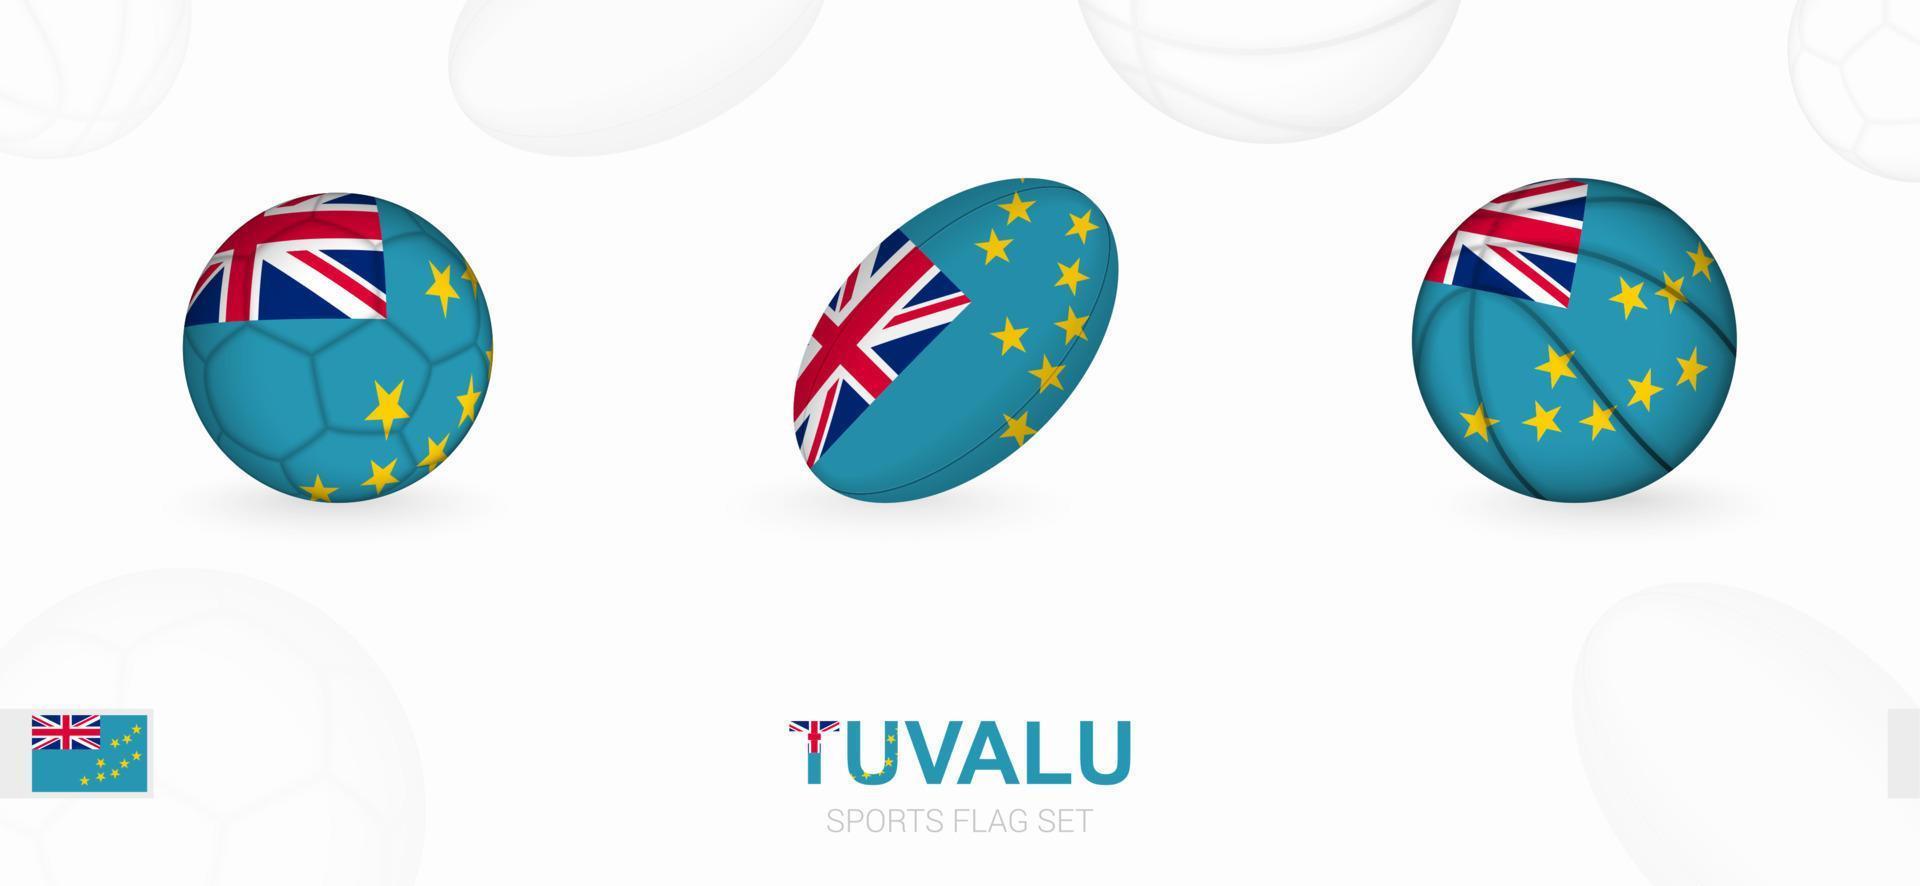 sport- pictogrammen voor Amerikaans voetbal, rugby en basketbal met de vlag van tuvalu. vector